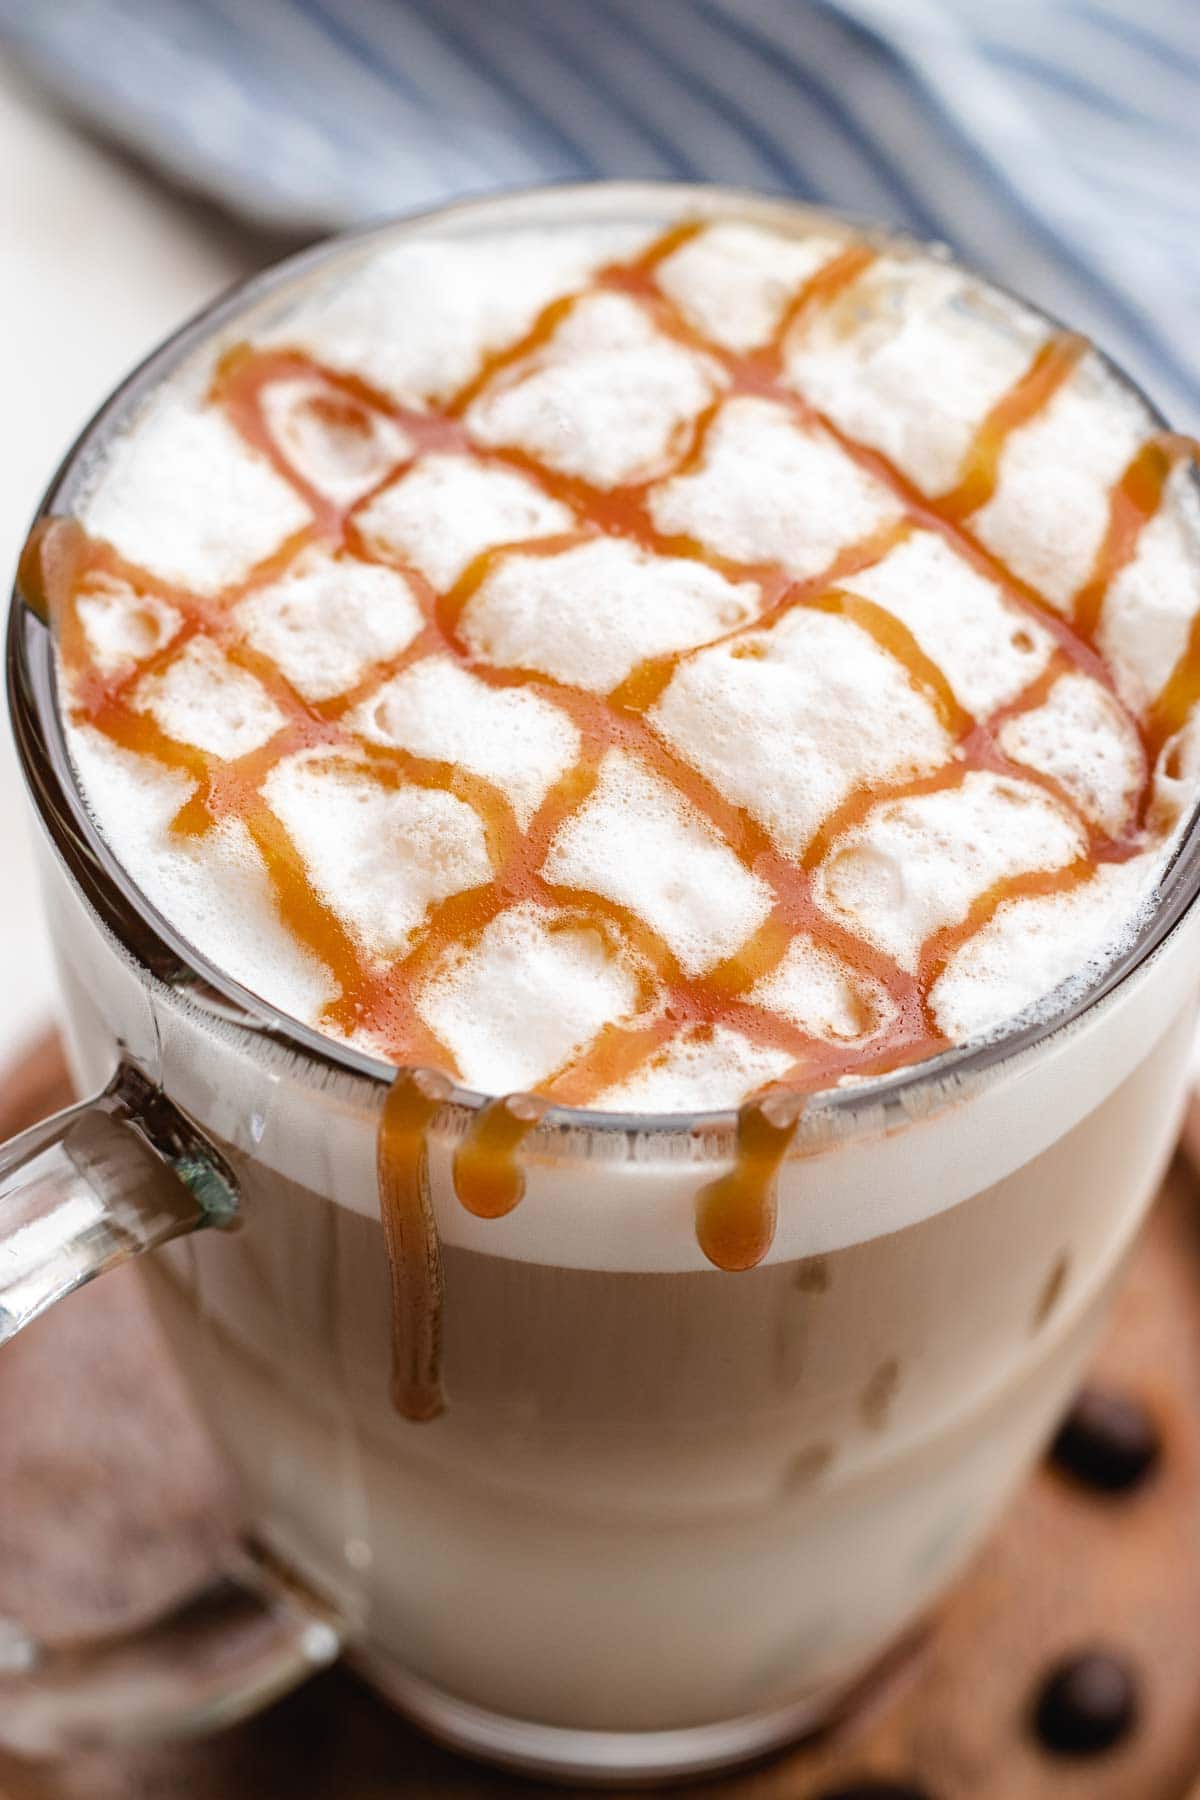 Indulgent Caramel Cappuccino Recipe: A Basic Recipe With A Flavor Spin